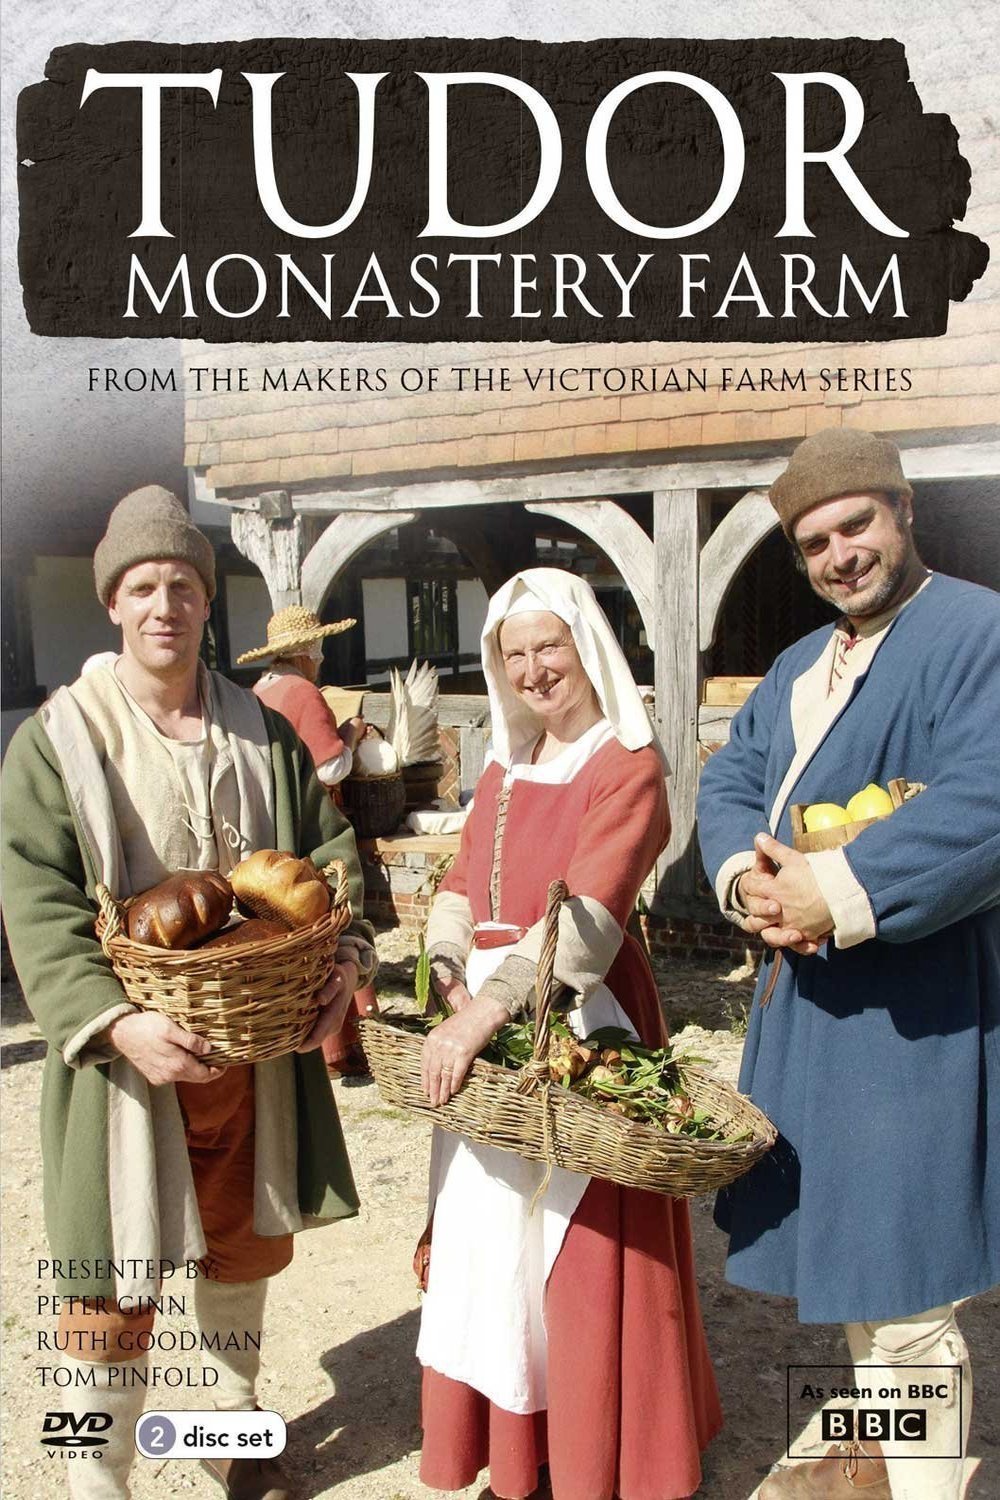 Poster of the movie Tudor Monastery Farm